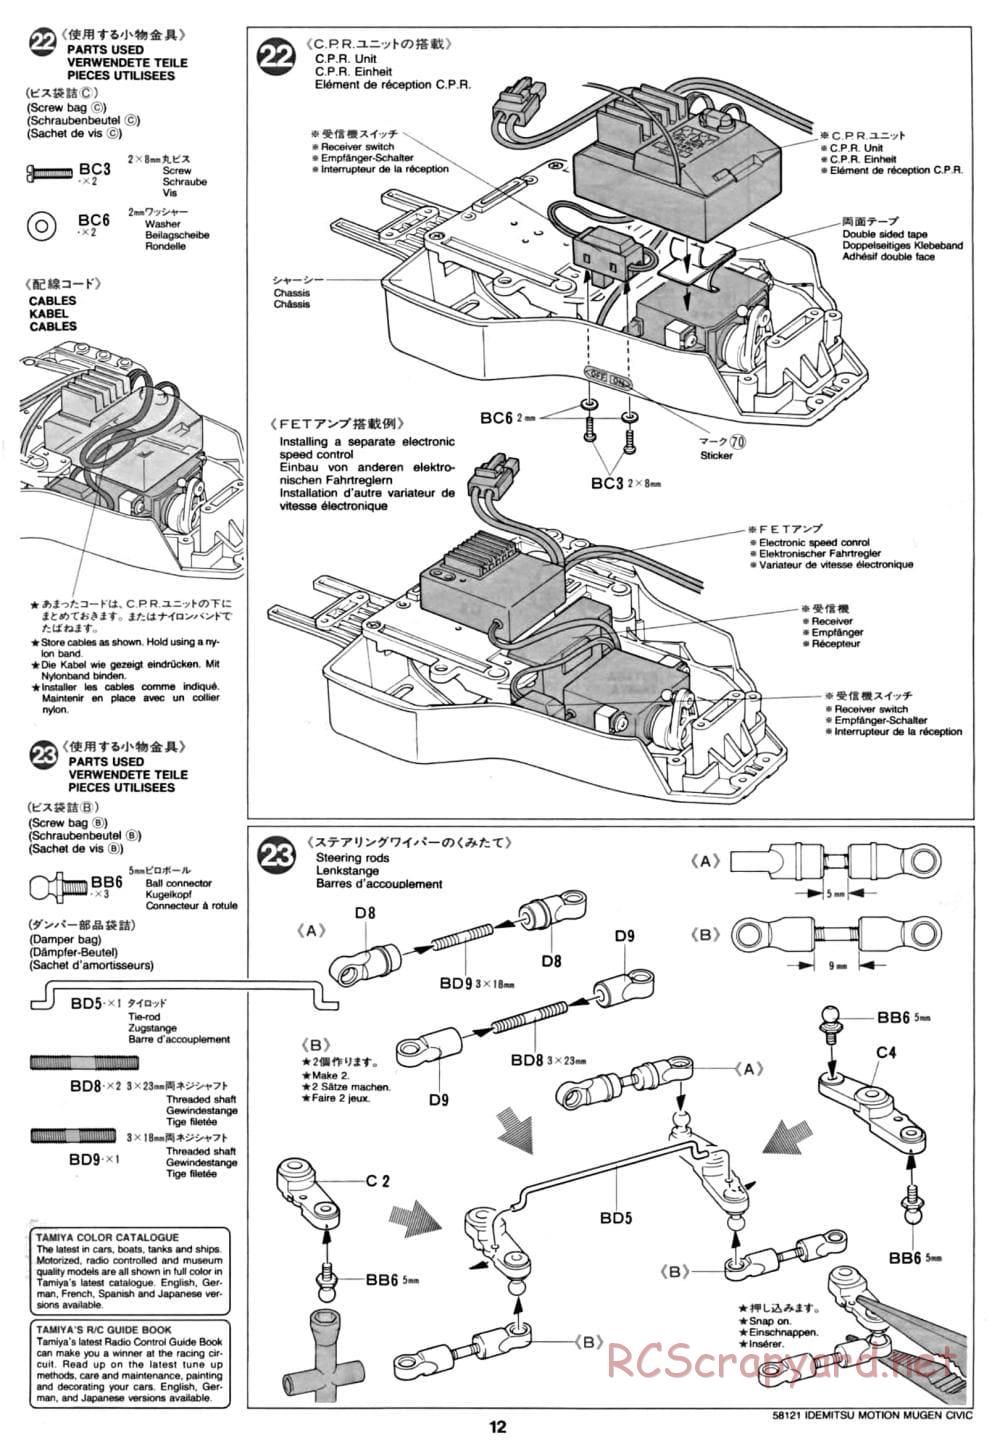 Tamiya - Idemitsu Motion Mugen Civic - FF-01 Chassis - Manual - Page 12